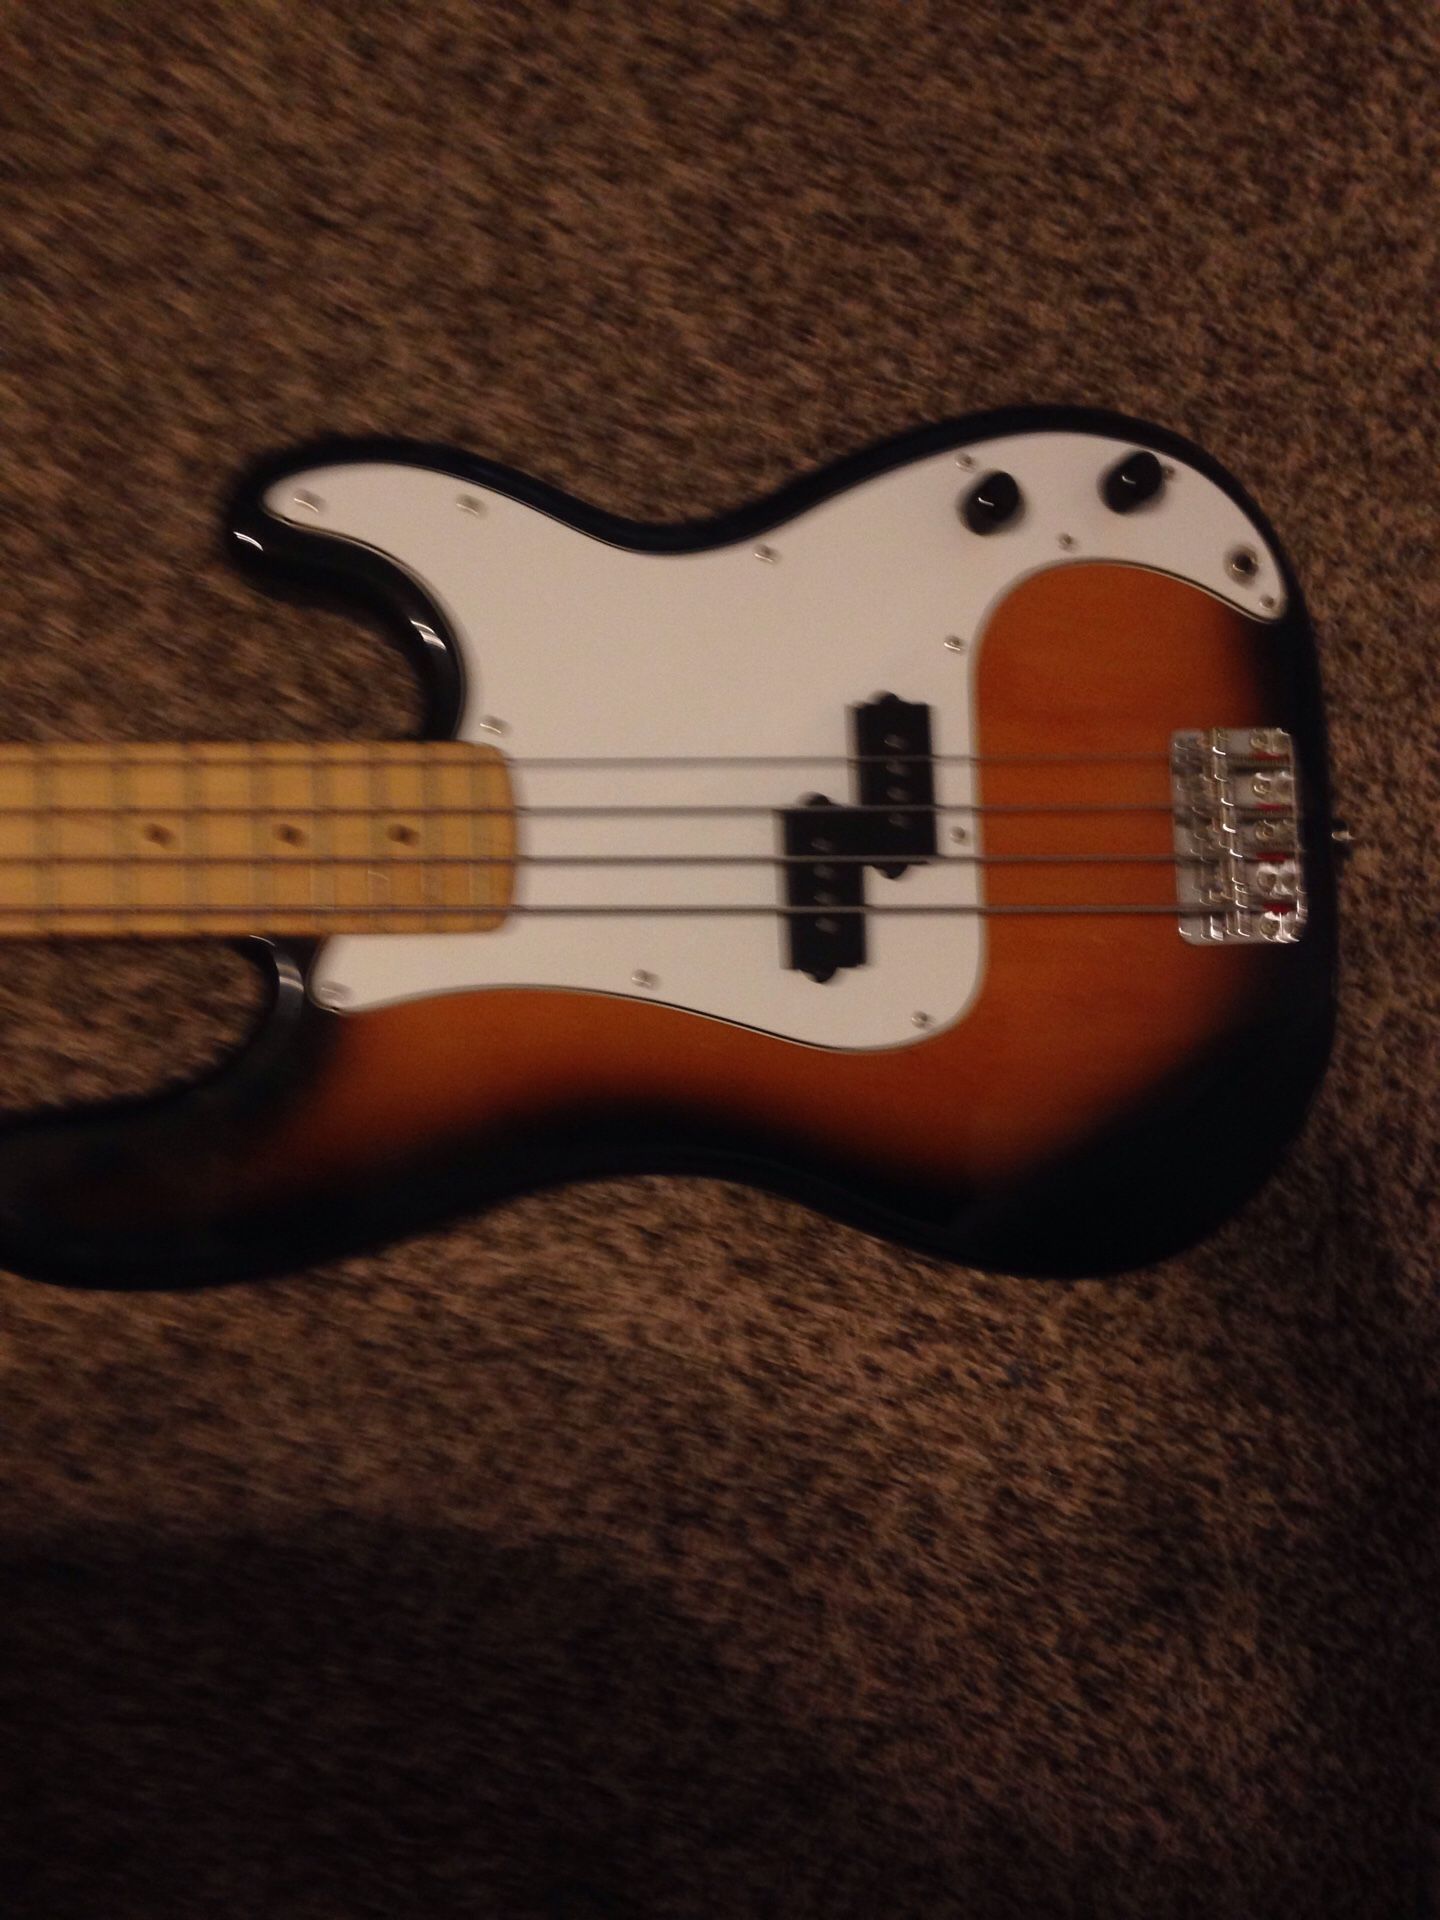 Corts bass guitar ( barley used, like new)